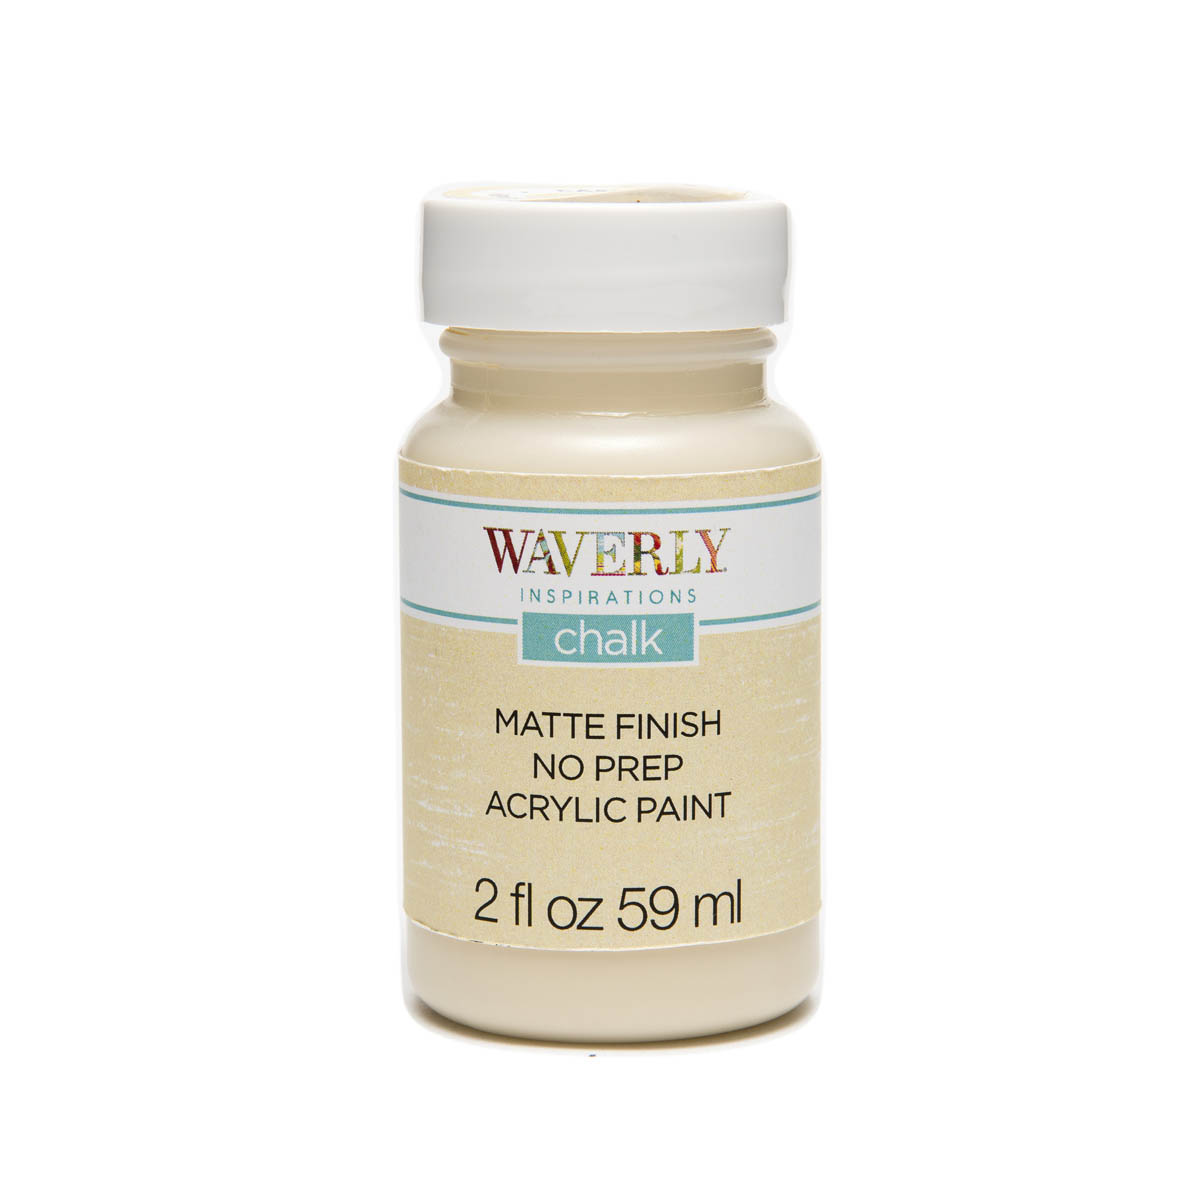 Waverly ® Inspirations Chalk Finish Acrylic Paint - Cashew, 2 oz. - 60739E